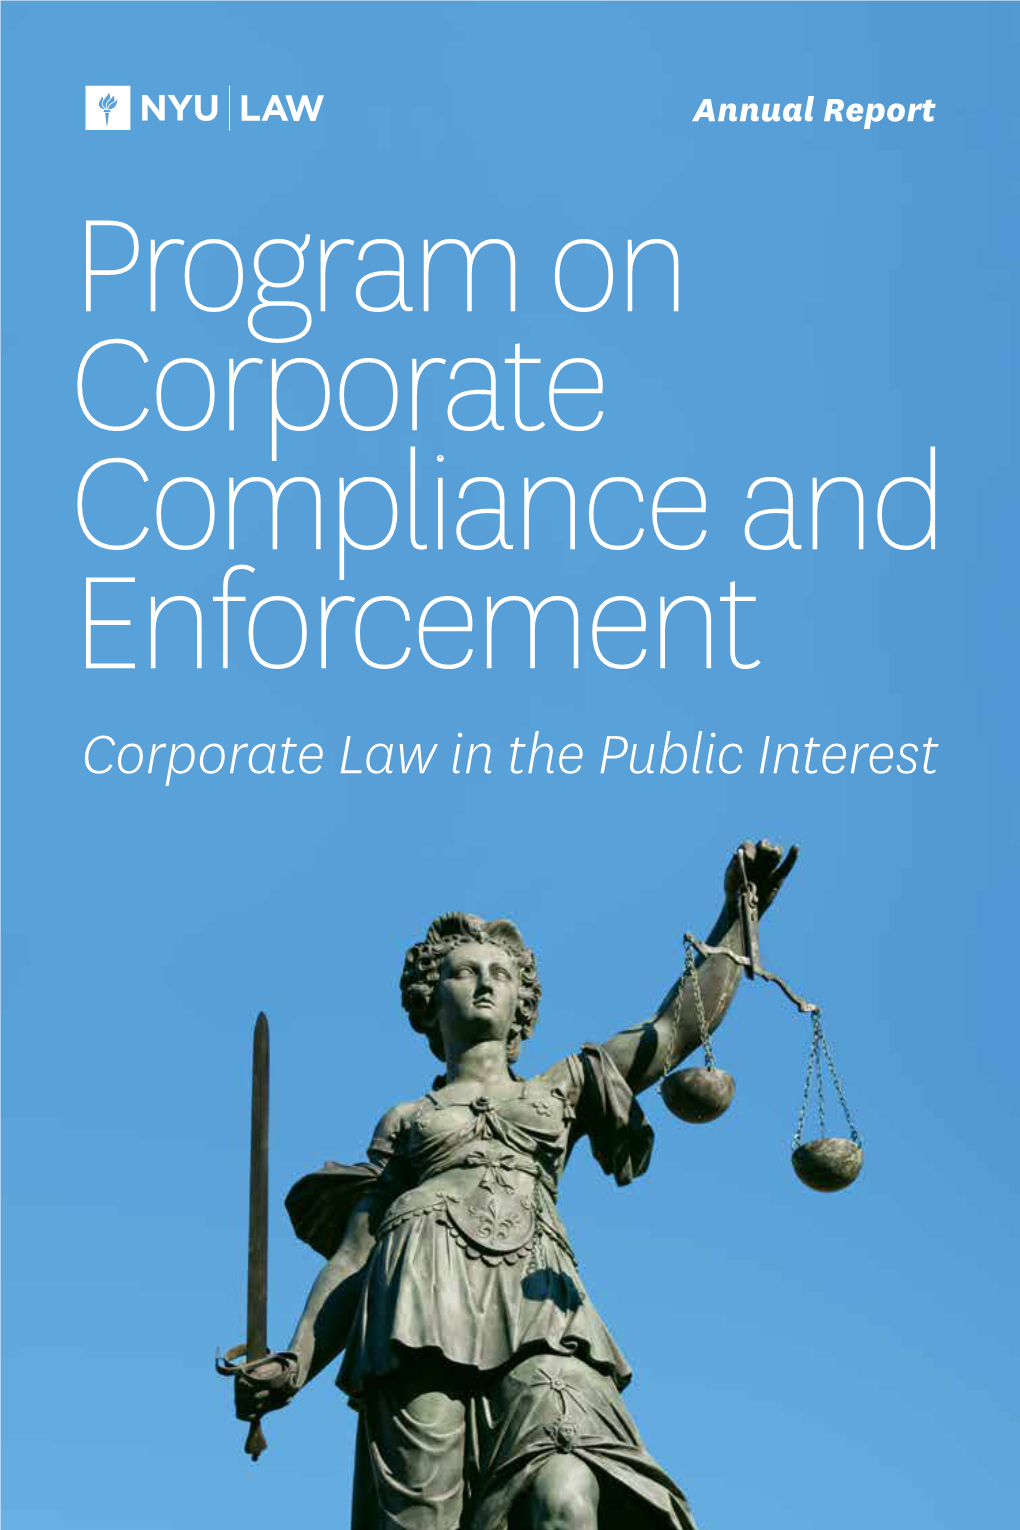 Corporate Law in the Public Interest